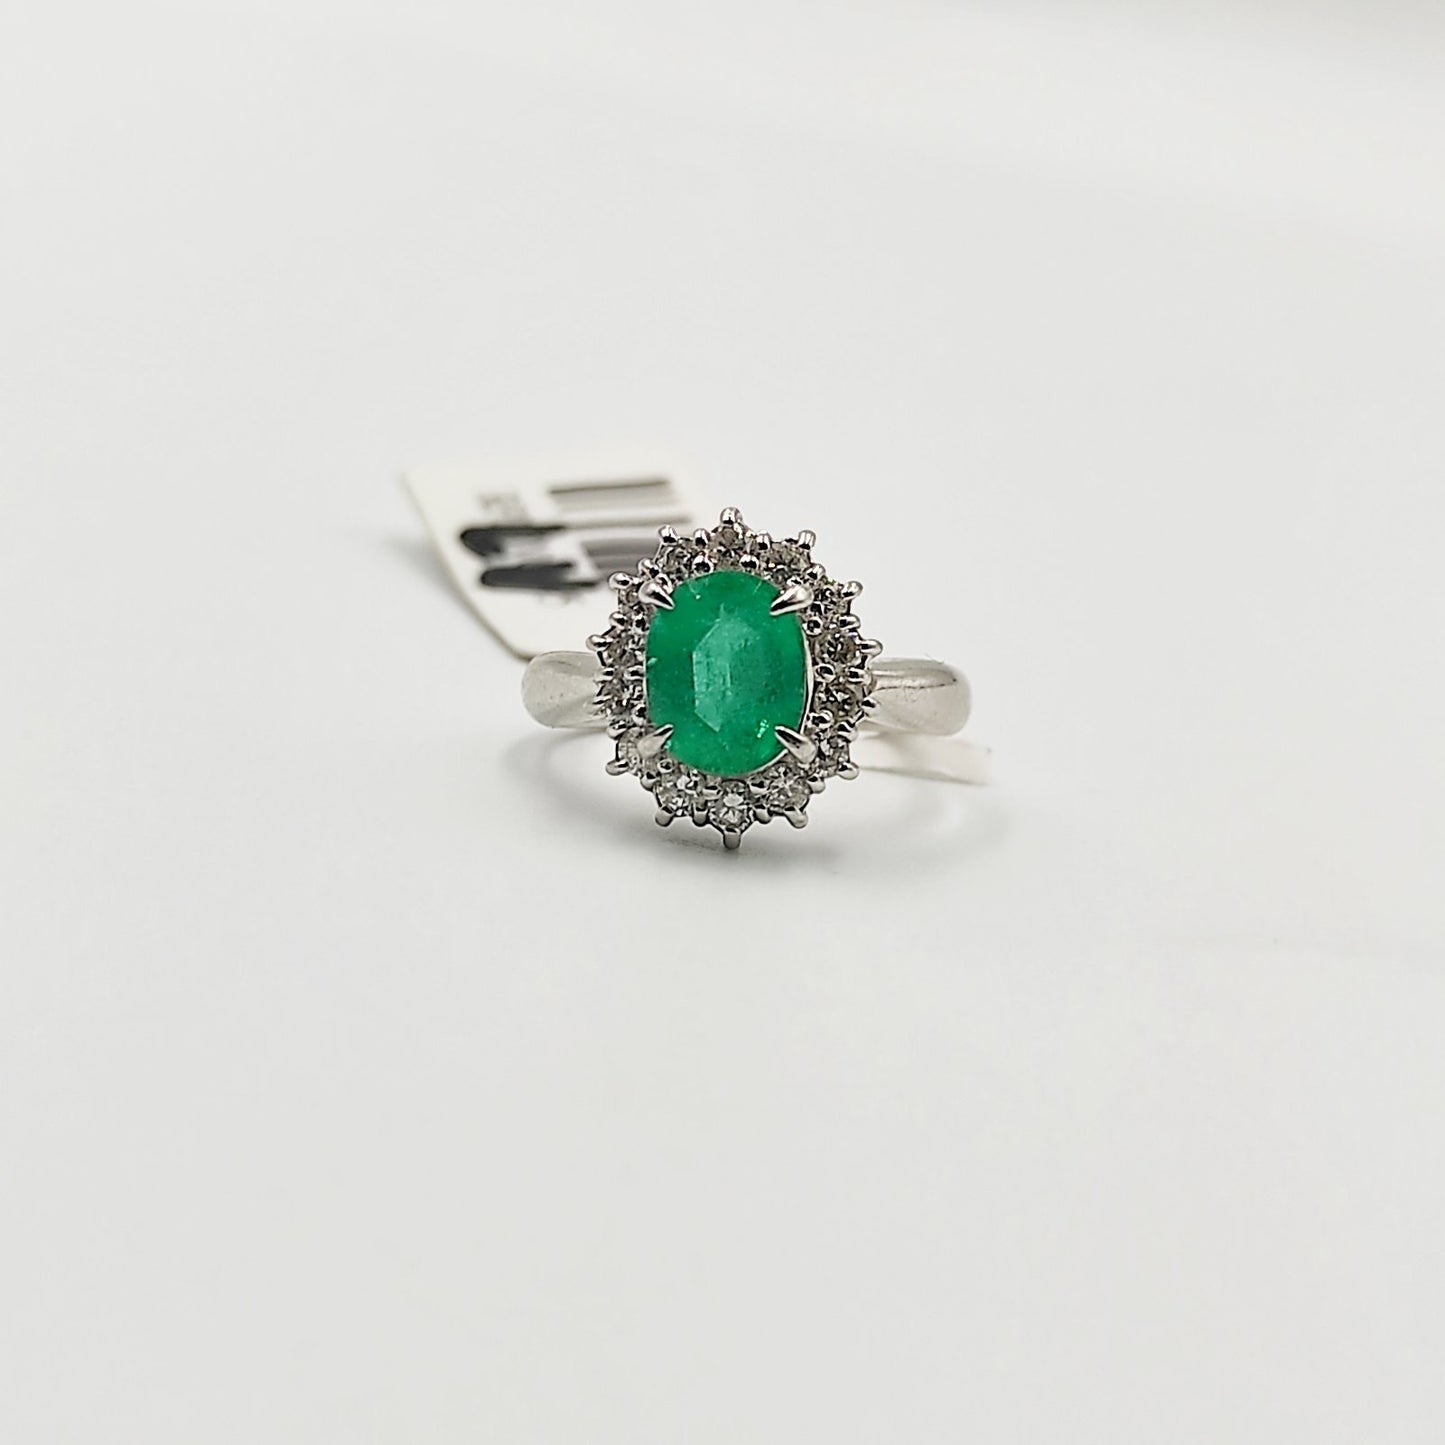 1.2ctw Emerald Diamond Engagement Ring/ Women's Ring in Platinum